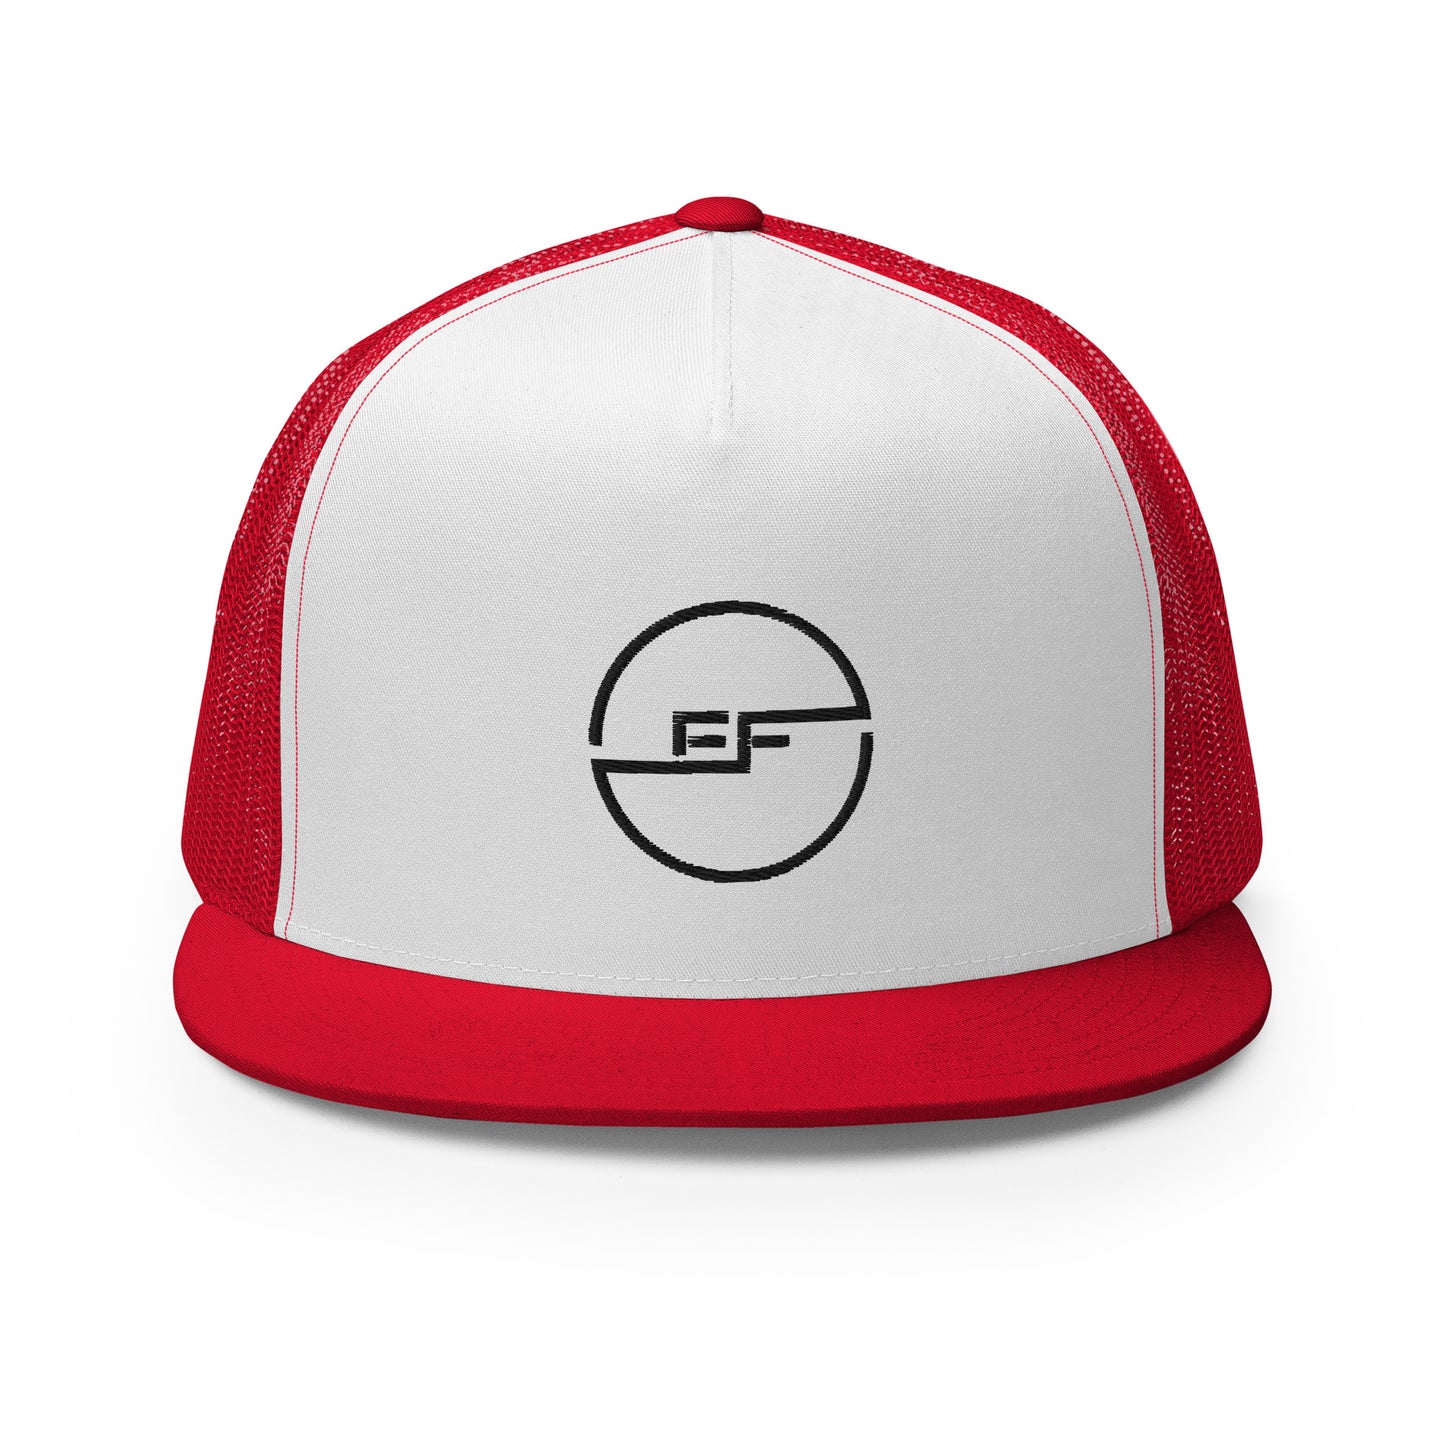 Eli Finley "EF" Trucker Cap